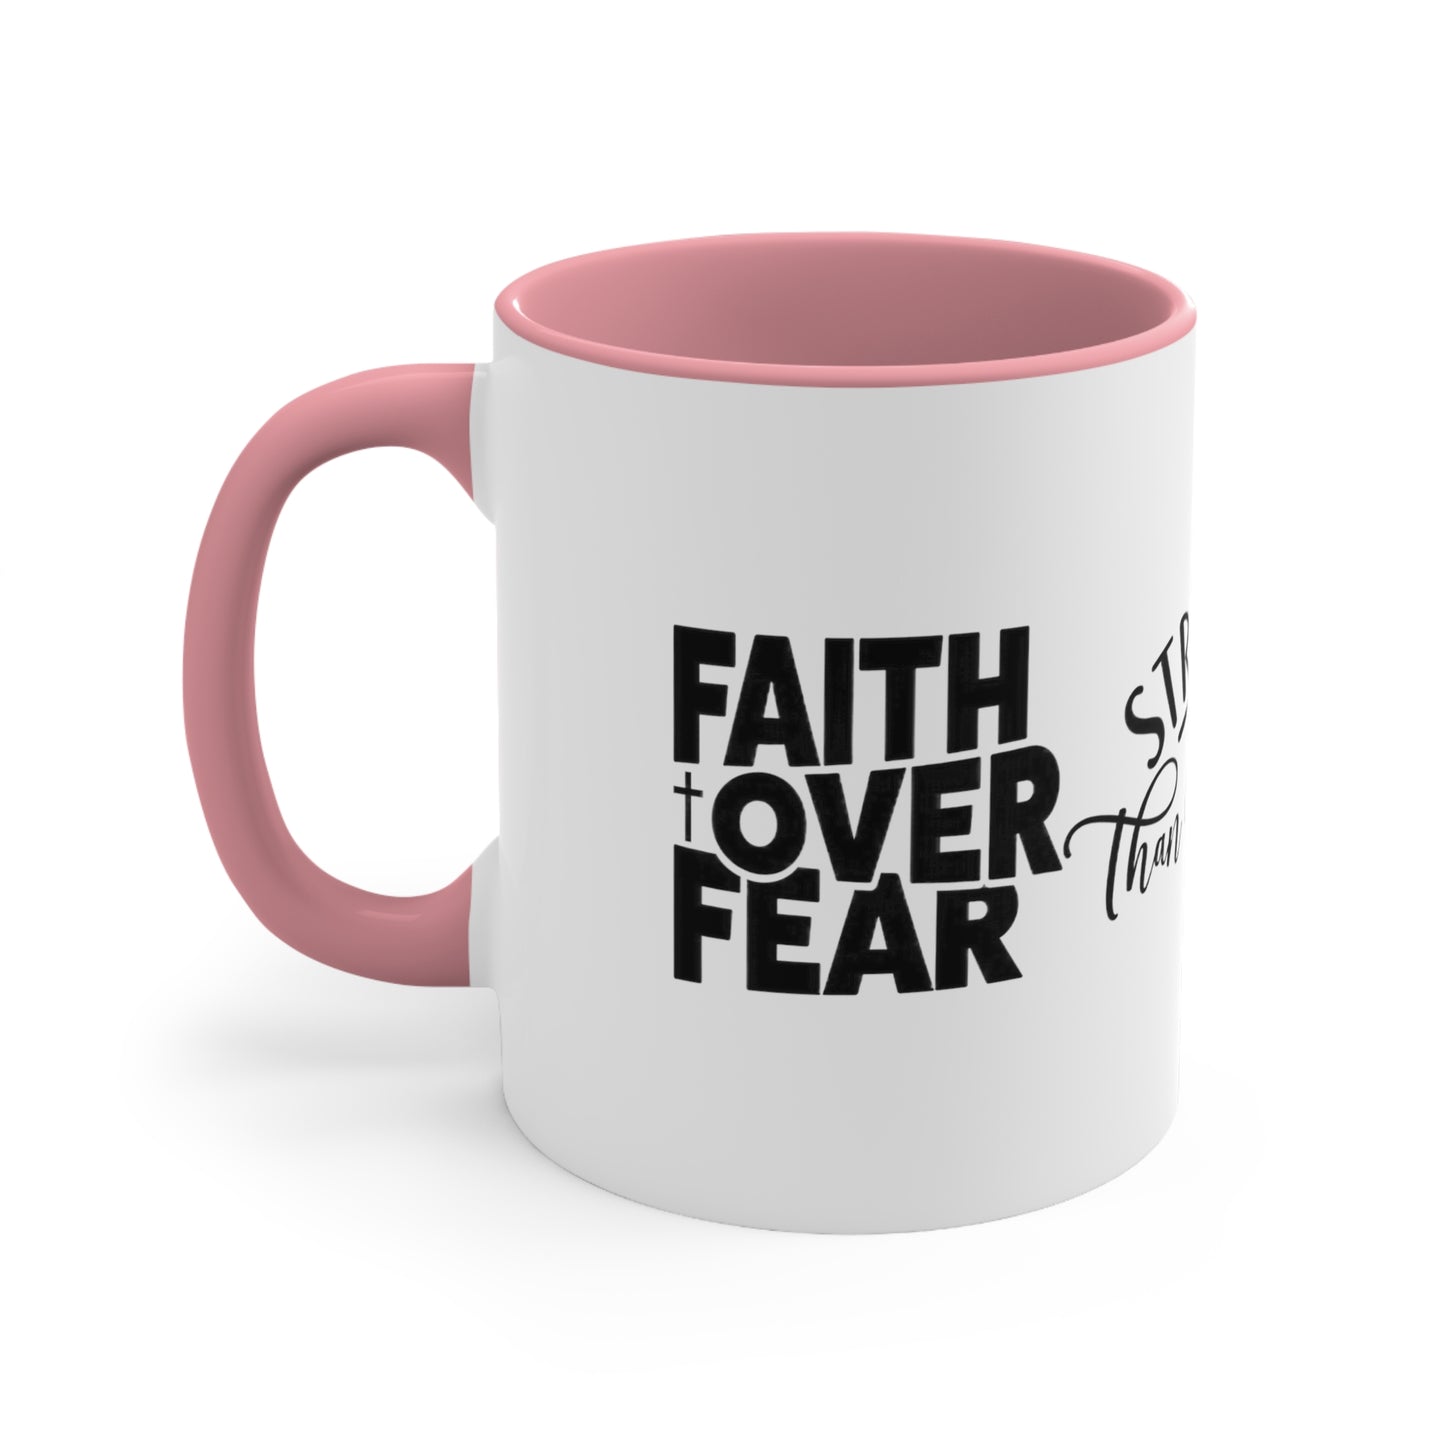 STRONGER THAN YESTERDAY - FAITH OVER FEAR MUG - MUGSCITY - Free Shipping